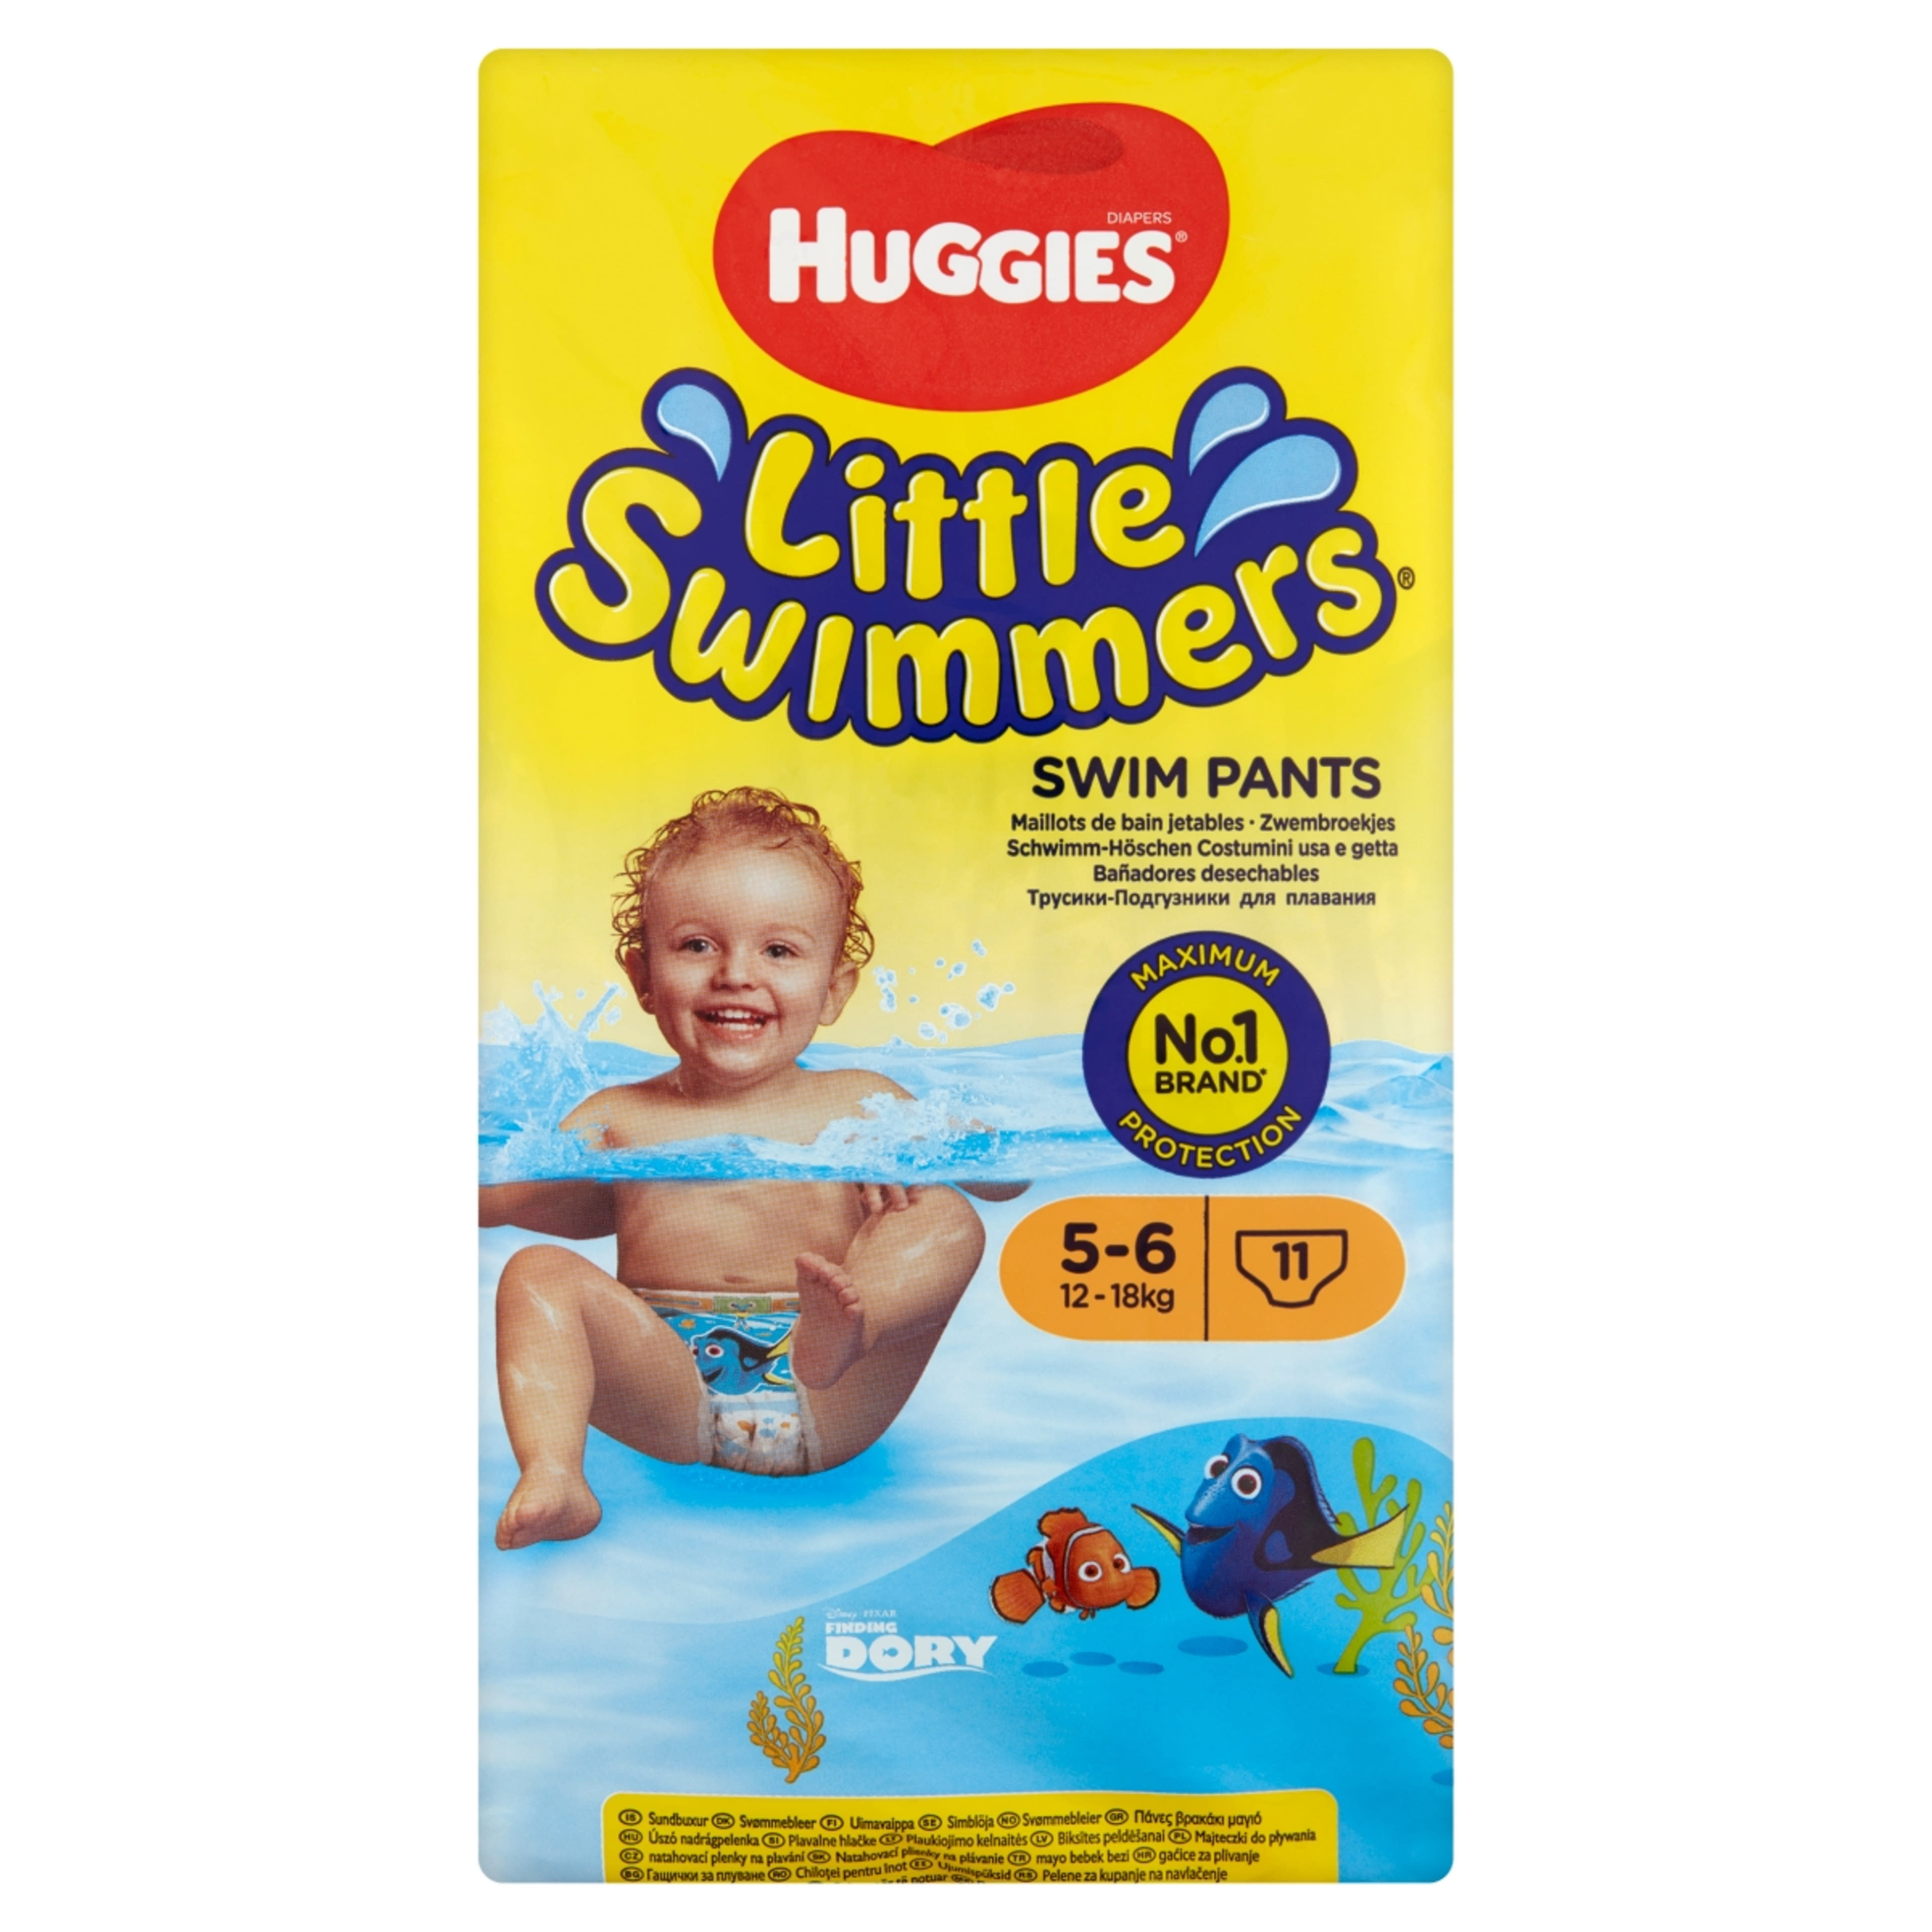 Huggies Little Swimmers 5-6 12 kg-18 kg úszó nadrágpelenka - 11 db